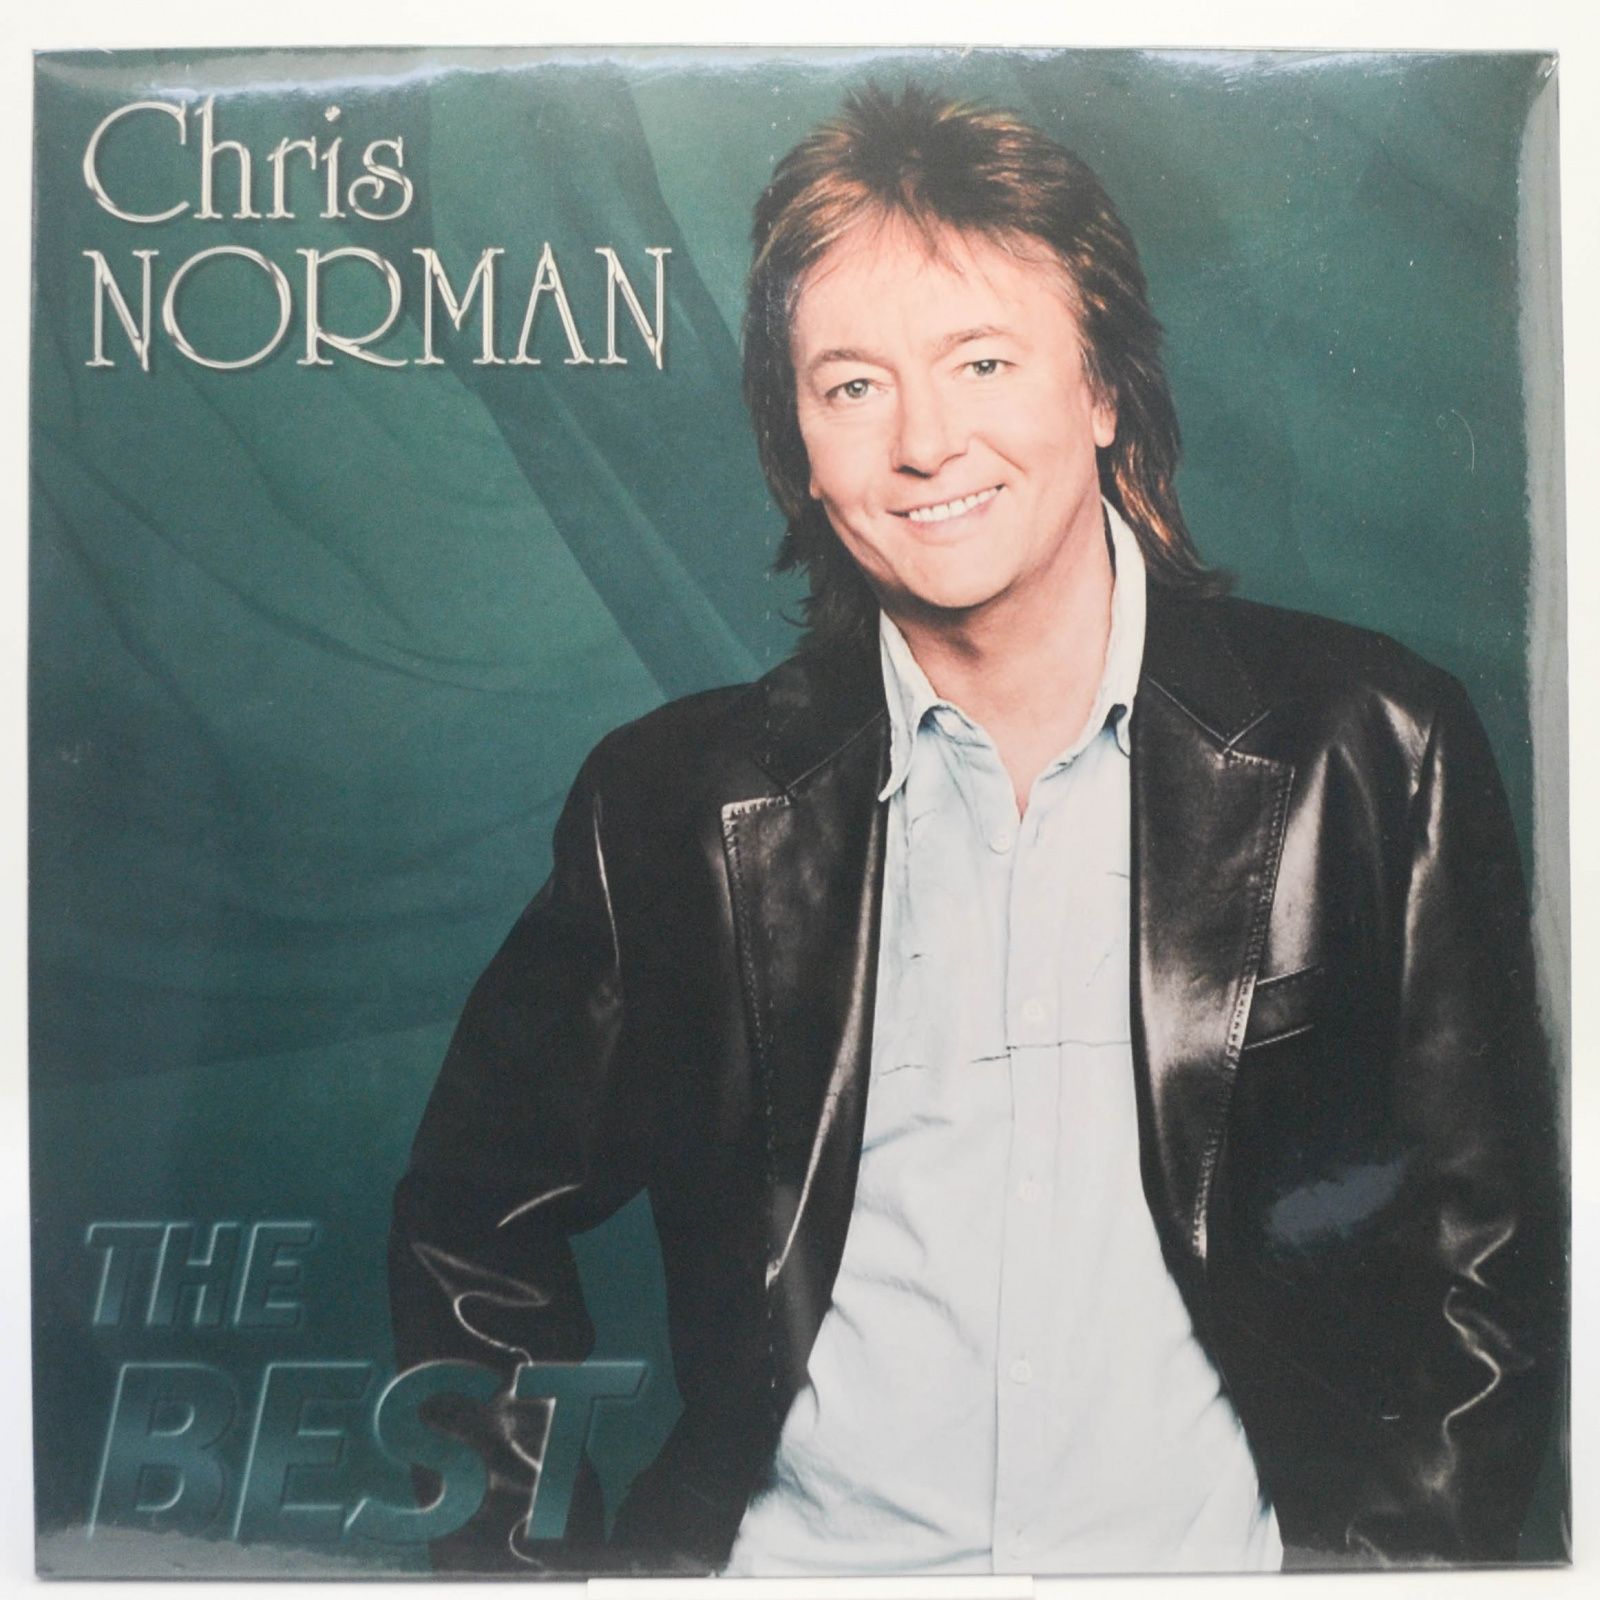 Chris Norman — The Best, 2018